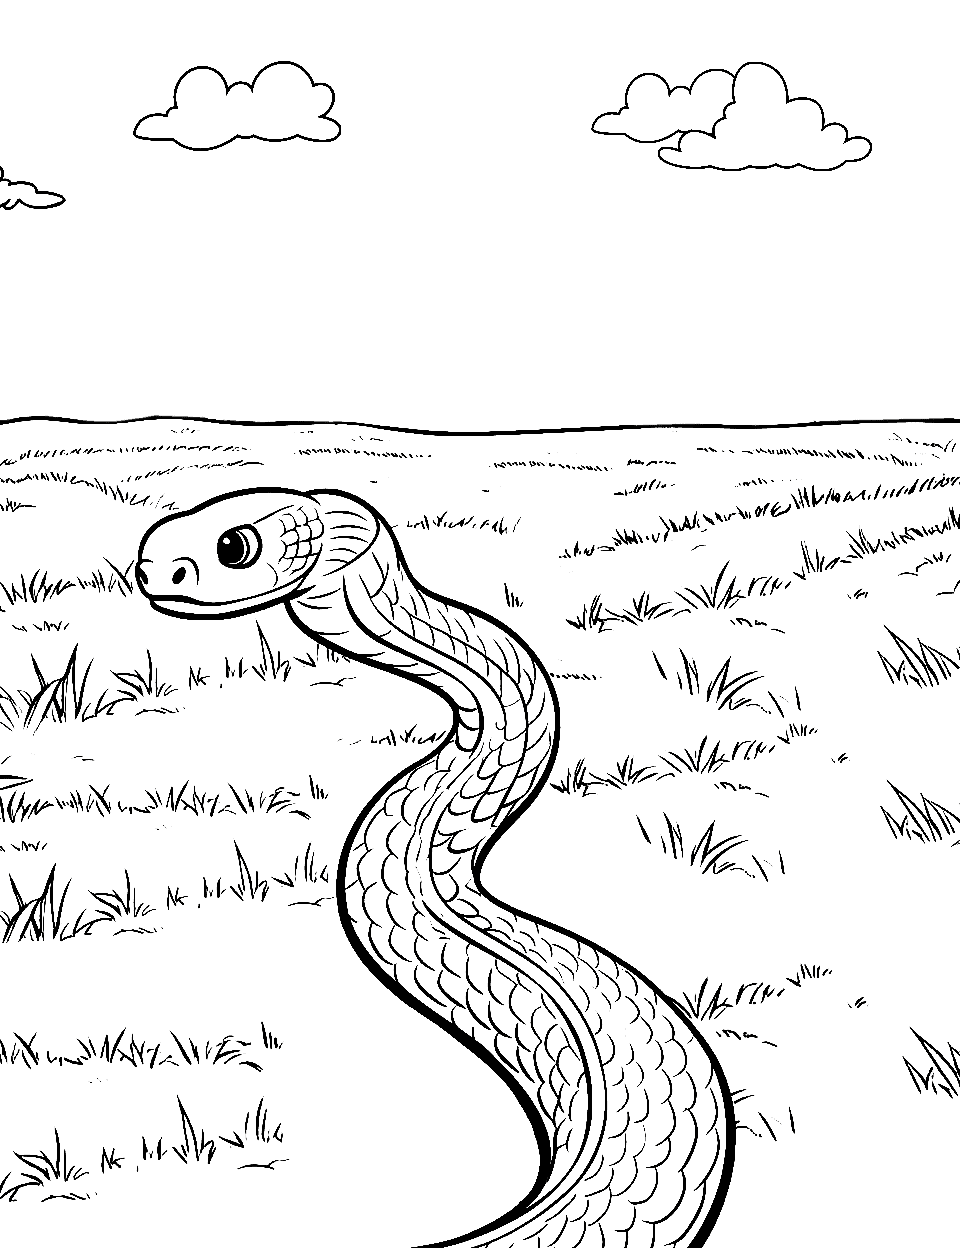 Farm Field Explorer Coloring Page - A snake moving through a farmland.